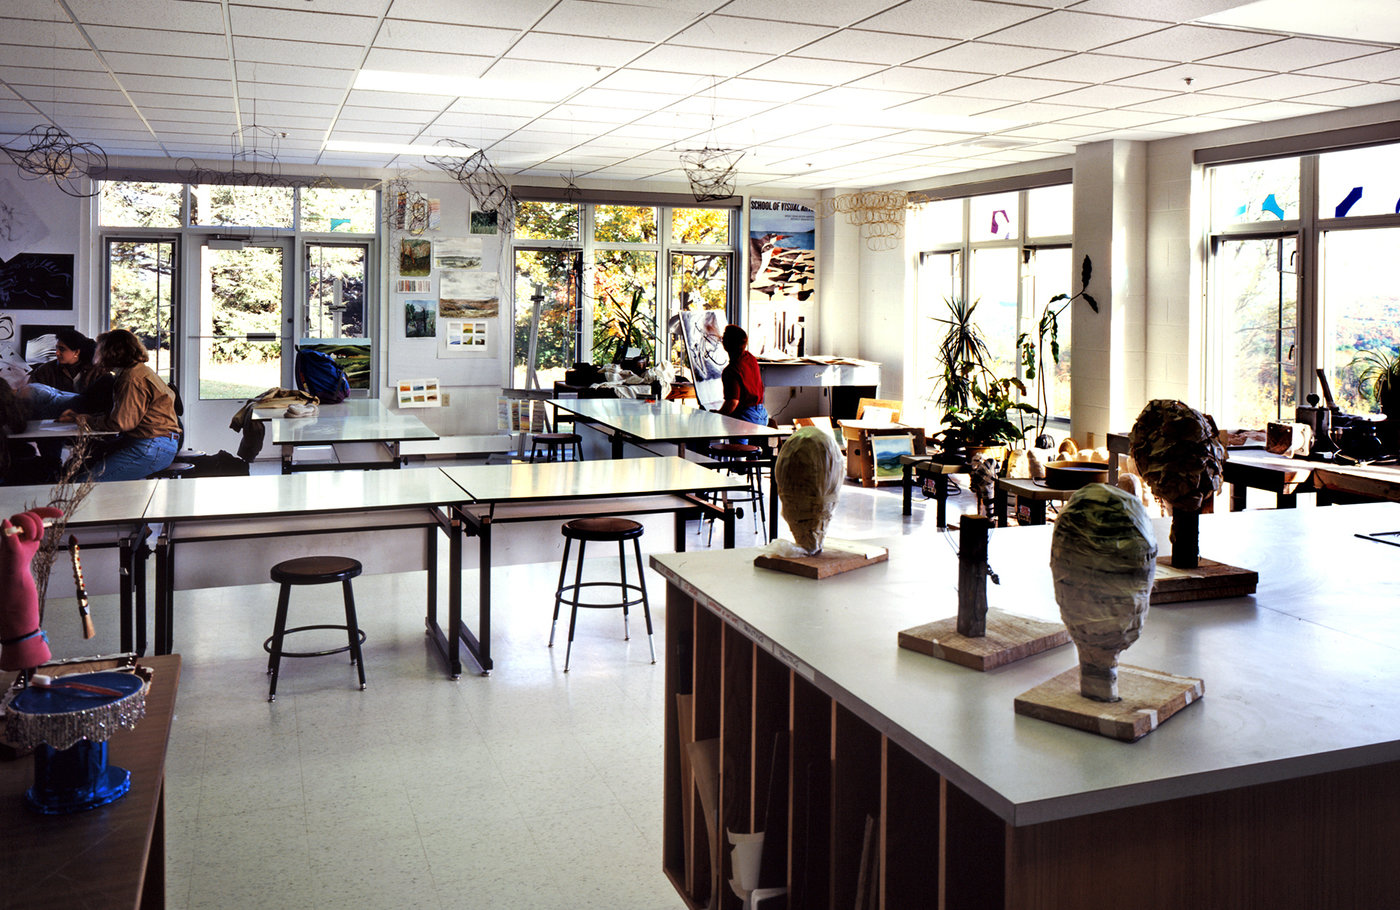 11 tskp woodstock academy master plan expansion interior detail classroom art sculptures 1400 0x165x1875x1219 q85